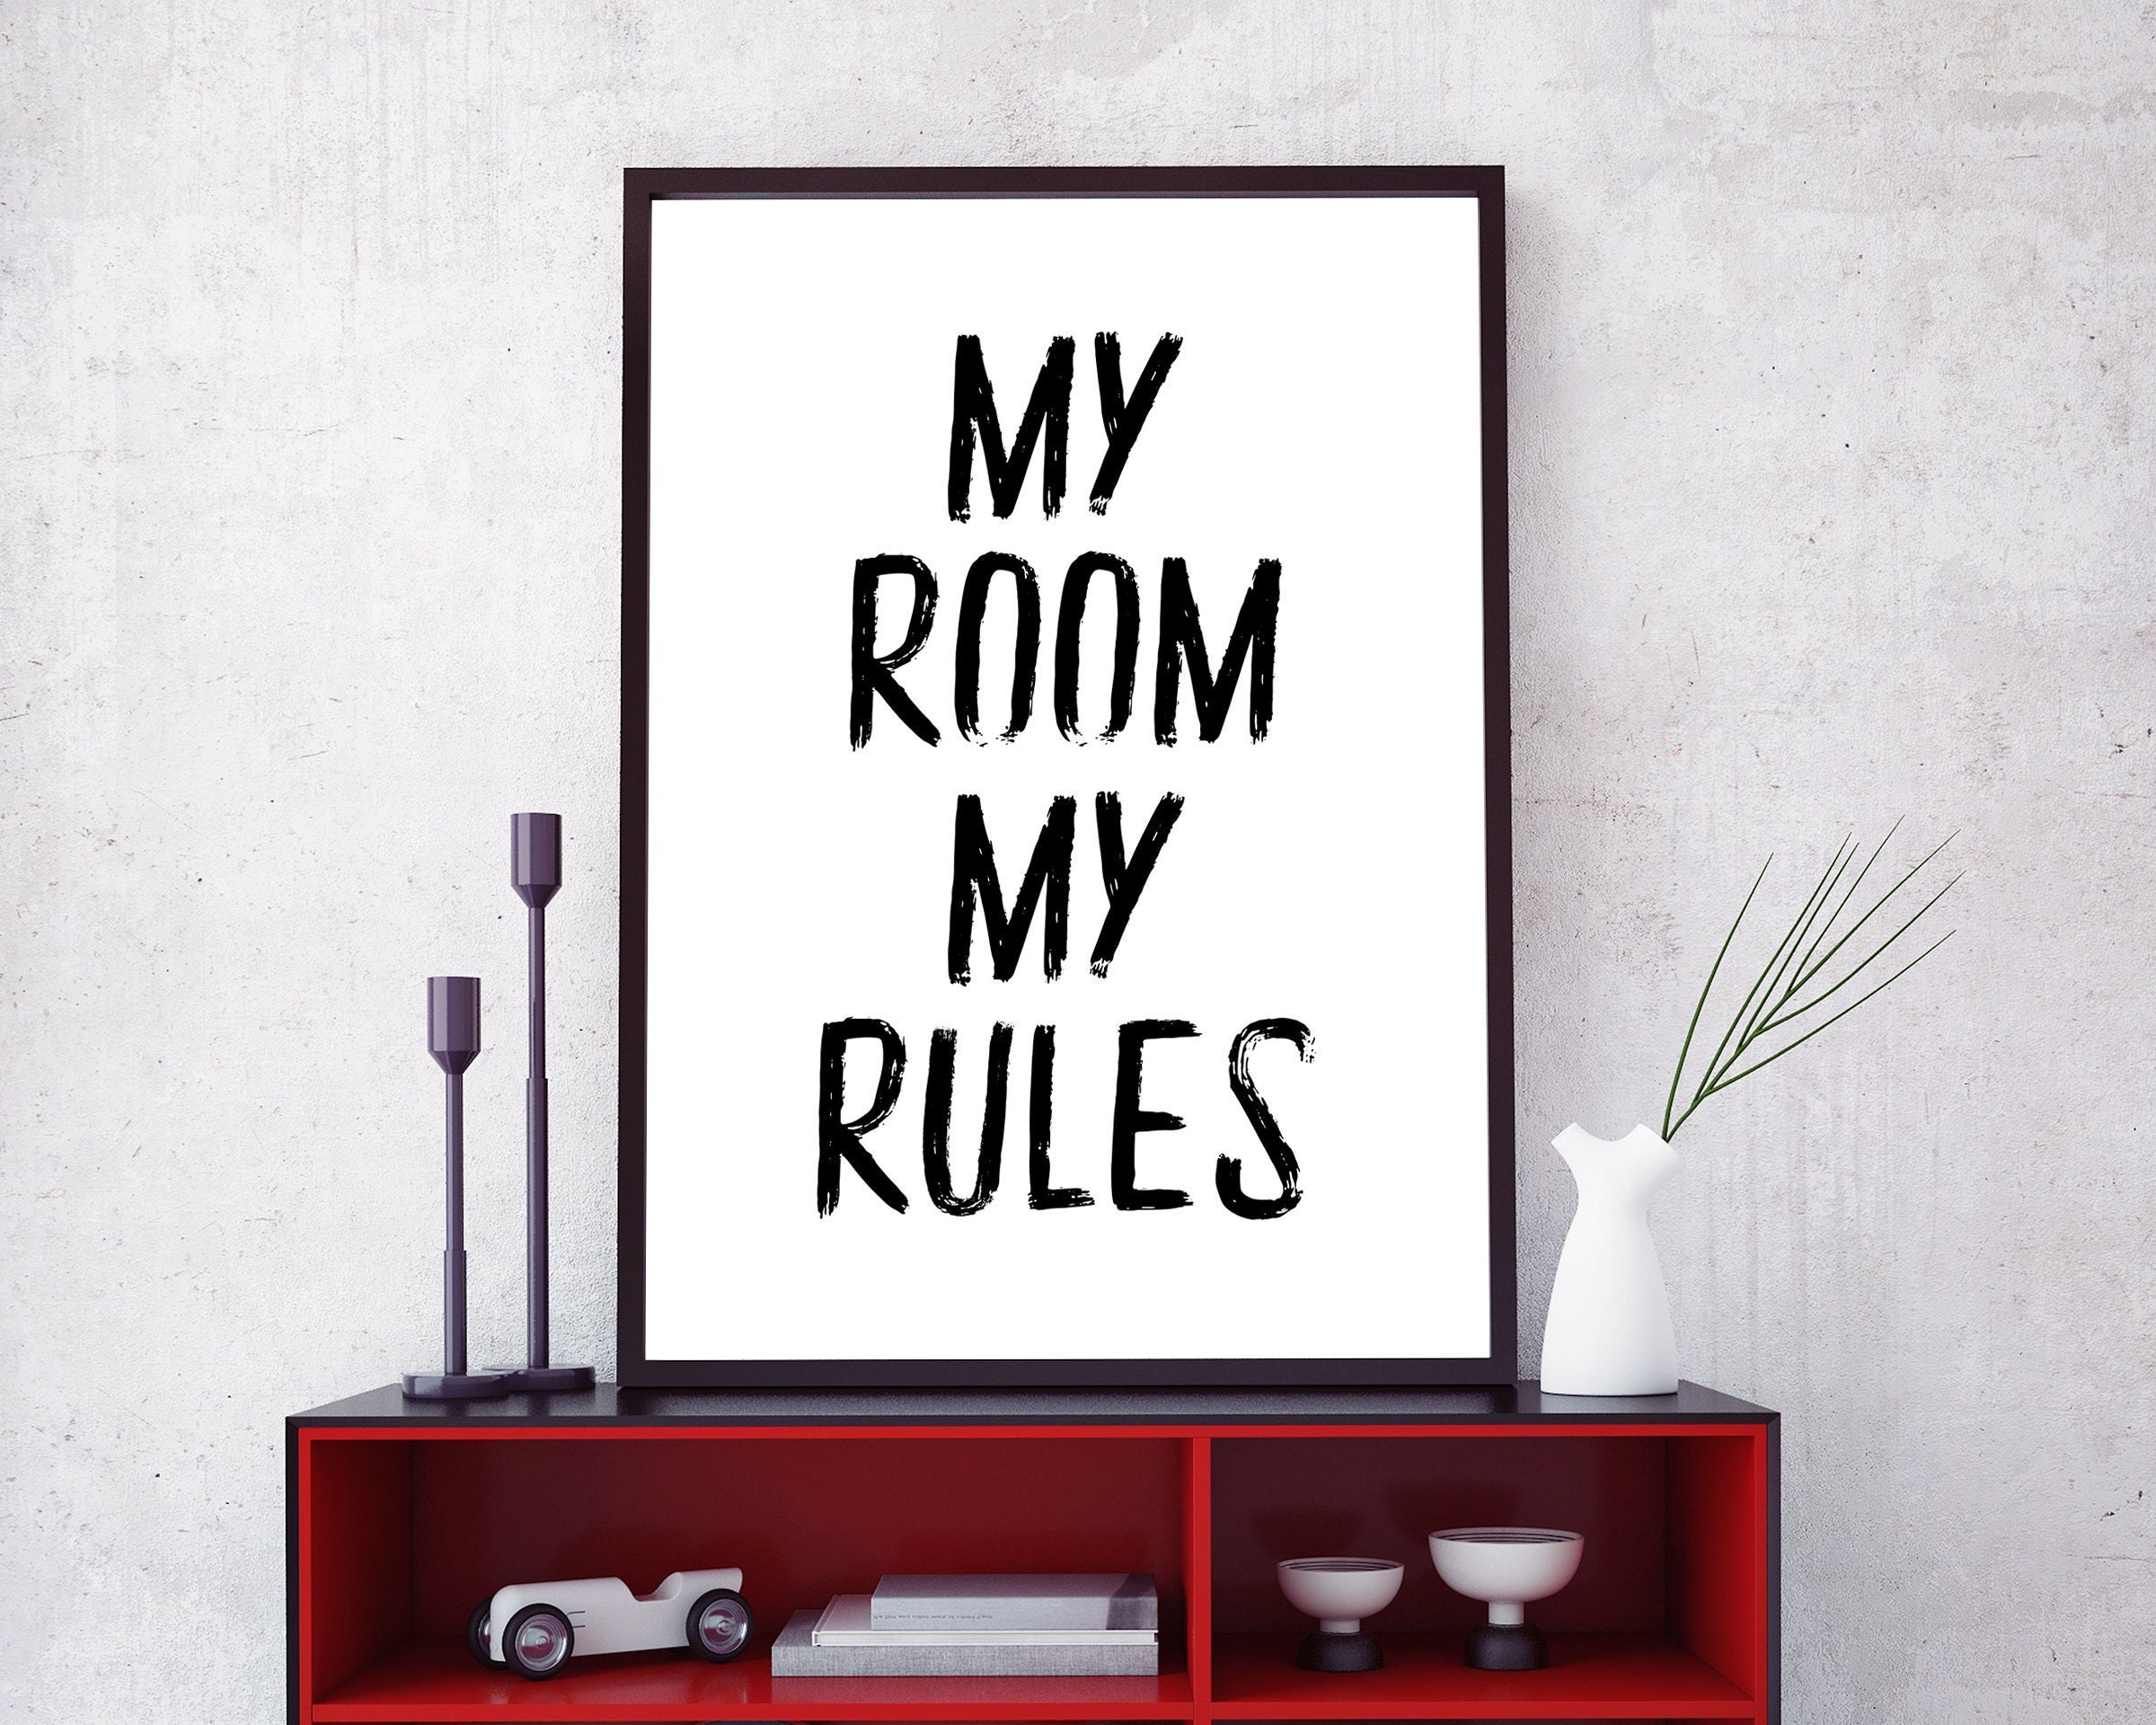 She made my room. My Room Rules. My Room my Rules. My Bedroom Rules. Rules for my Room.